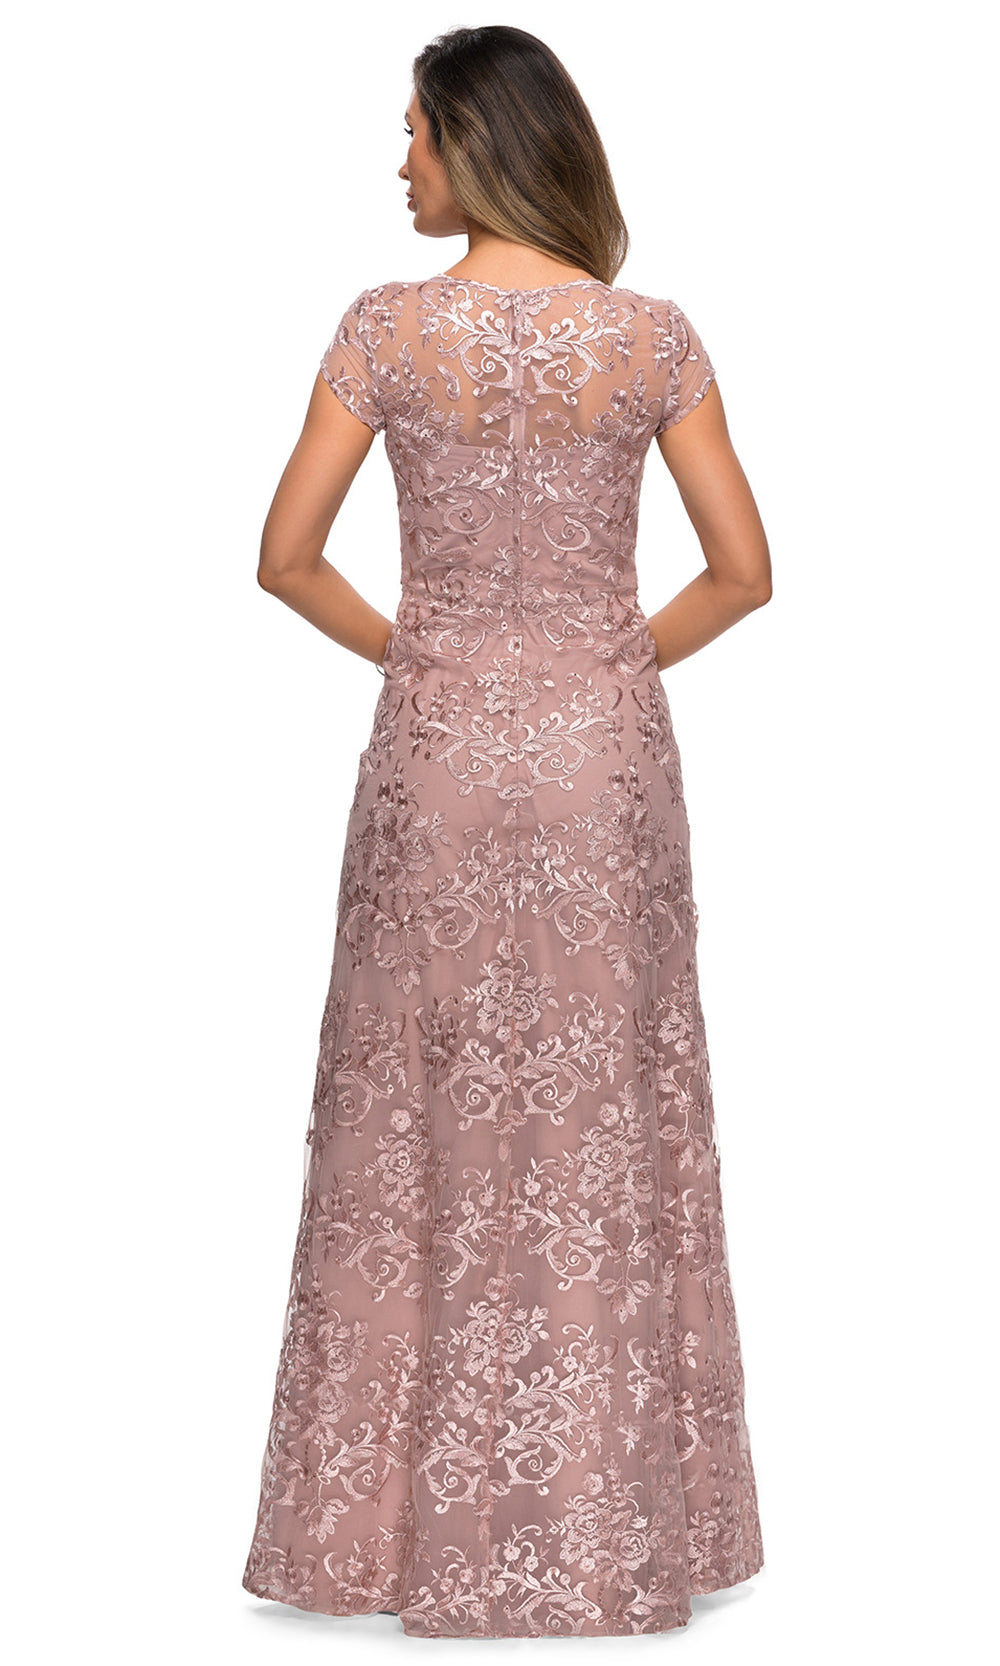 La Femme - 27951 Embroidered V Neck Fitted Dress In Pink